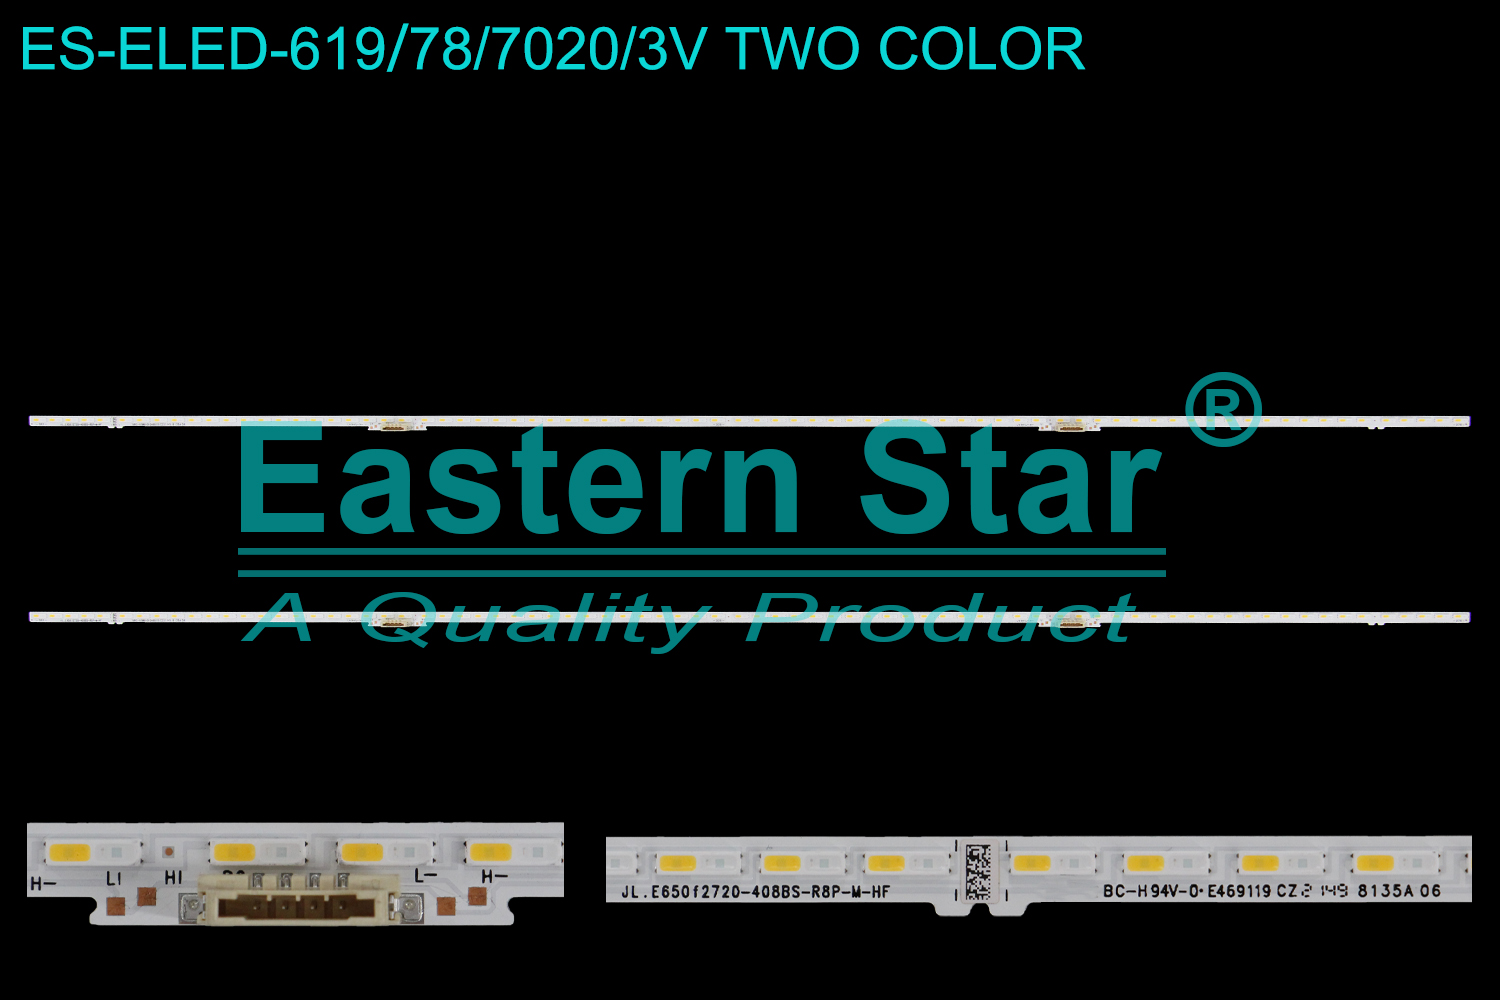 ES-ELED-619 ELED/EDGE TV backlight use for 65''  Samsung JL.E650f2720-408BS-R8P-M-HF  E469119 CZ 8135A 06  LED STRIPS(2)